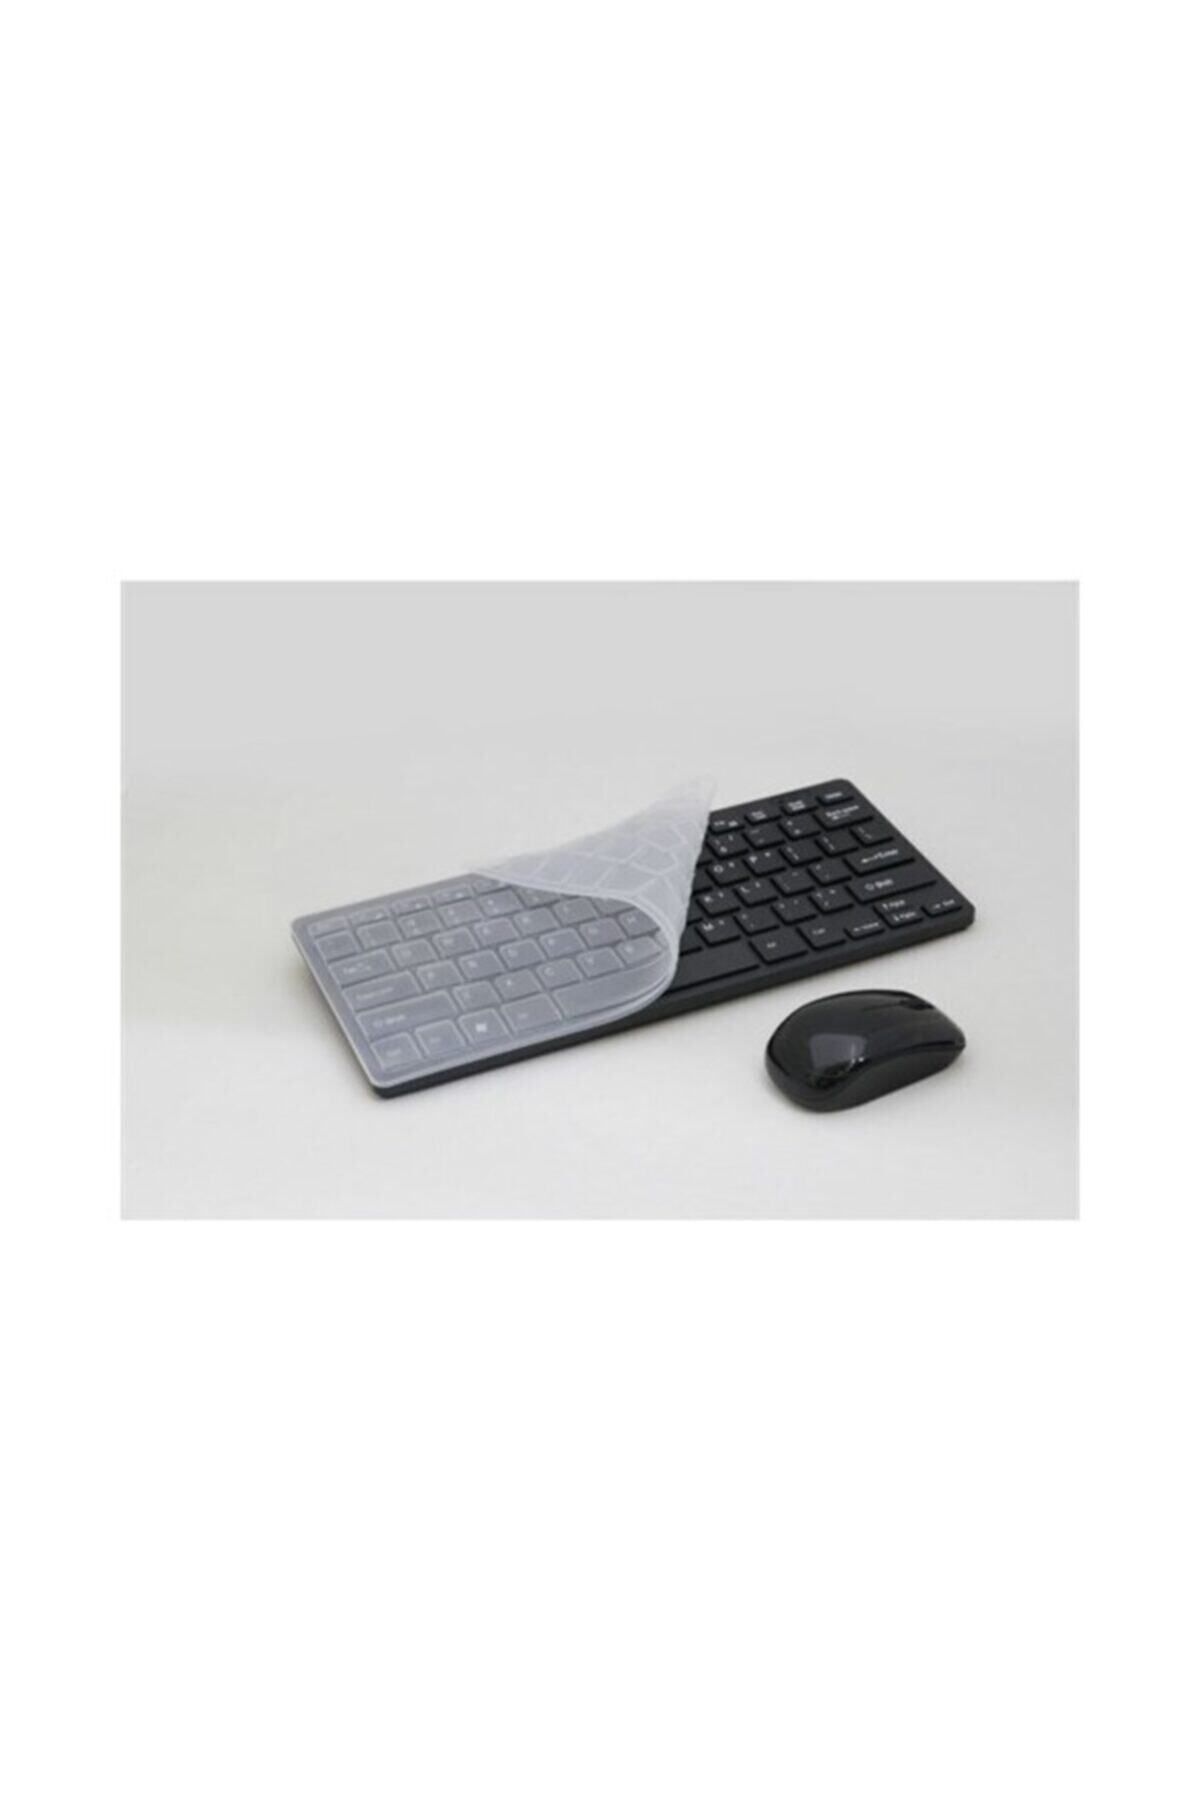 Kingboss Kablosuz Mini Klavye Mouse Set 2.4 Ghz Siyah